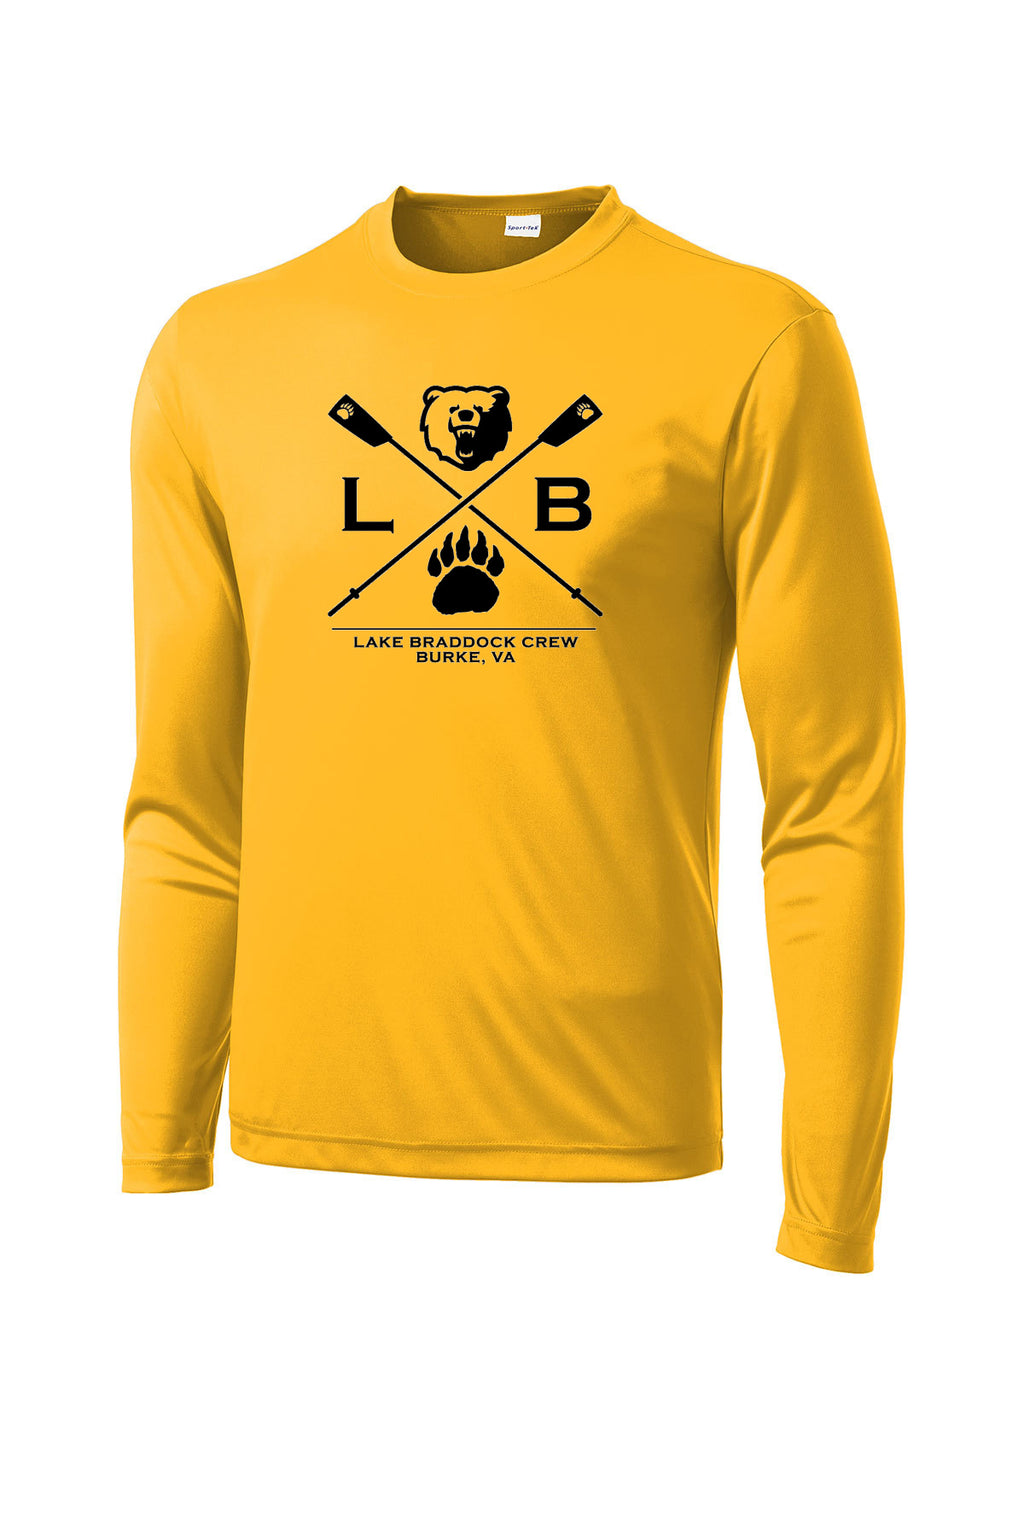 Lake Braddock Crew Long Sleev Performance T-Shirt